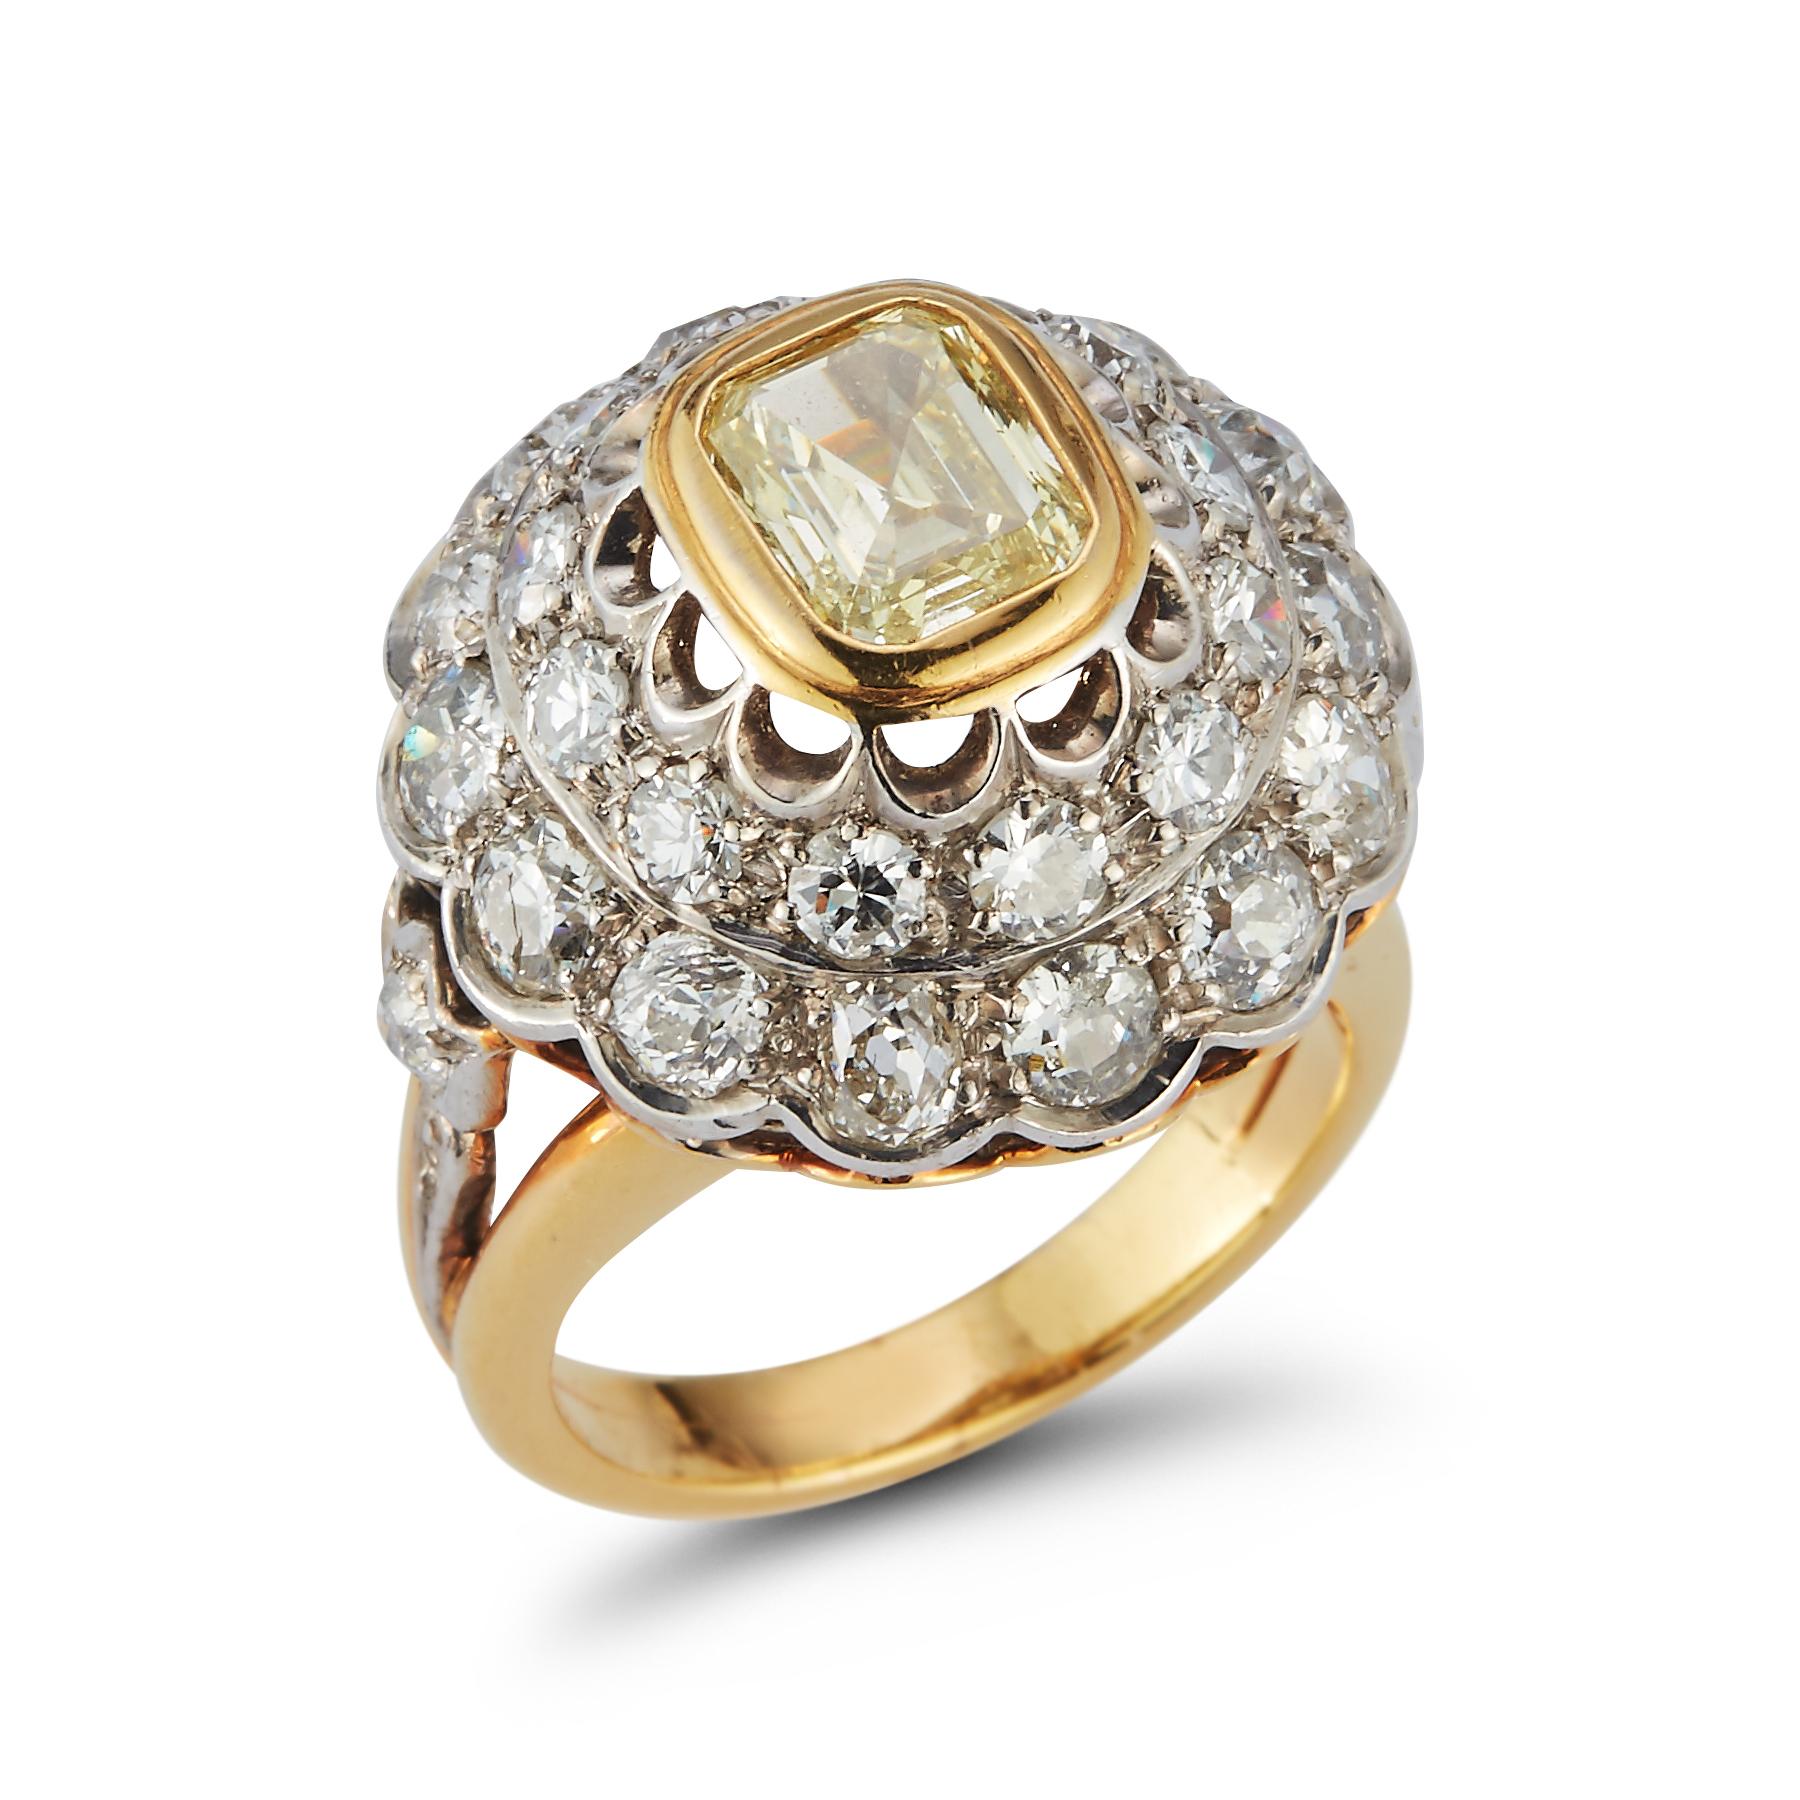 Fancy Light  Yellow Emerald Cut & Diamond Ring

Emerald Cut Weight: approximately  1.41 cts 

Diamond Weight:  approximately 2.78 cts 

Ring Size: 6.25

Re sizable free of charge 

Gold Type: 18K Yellow Gold 
